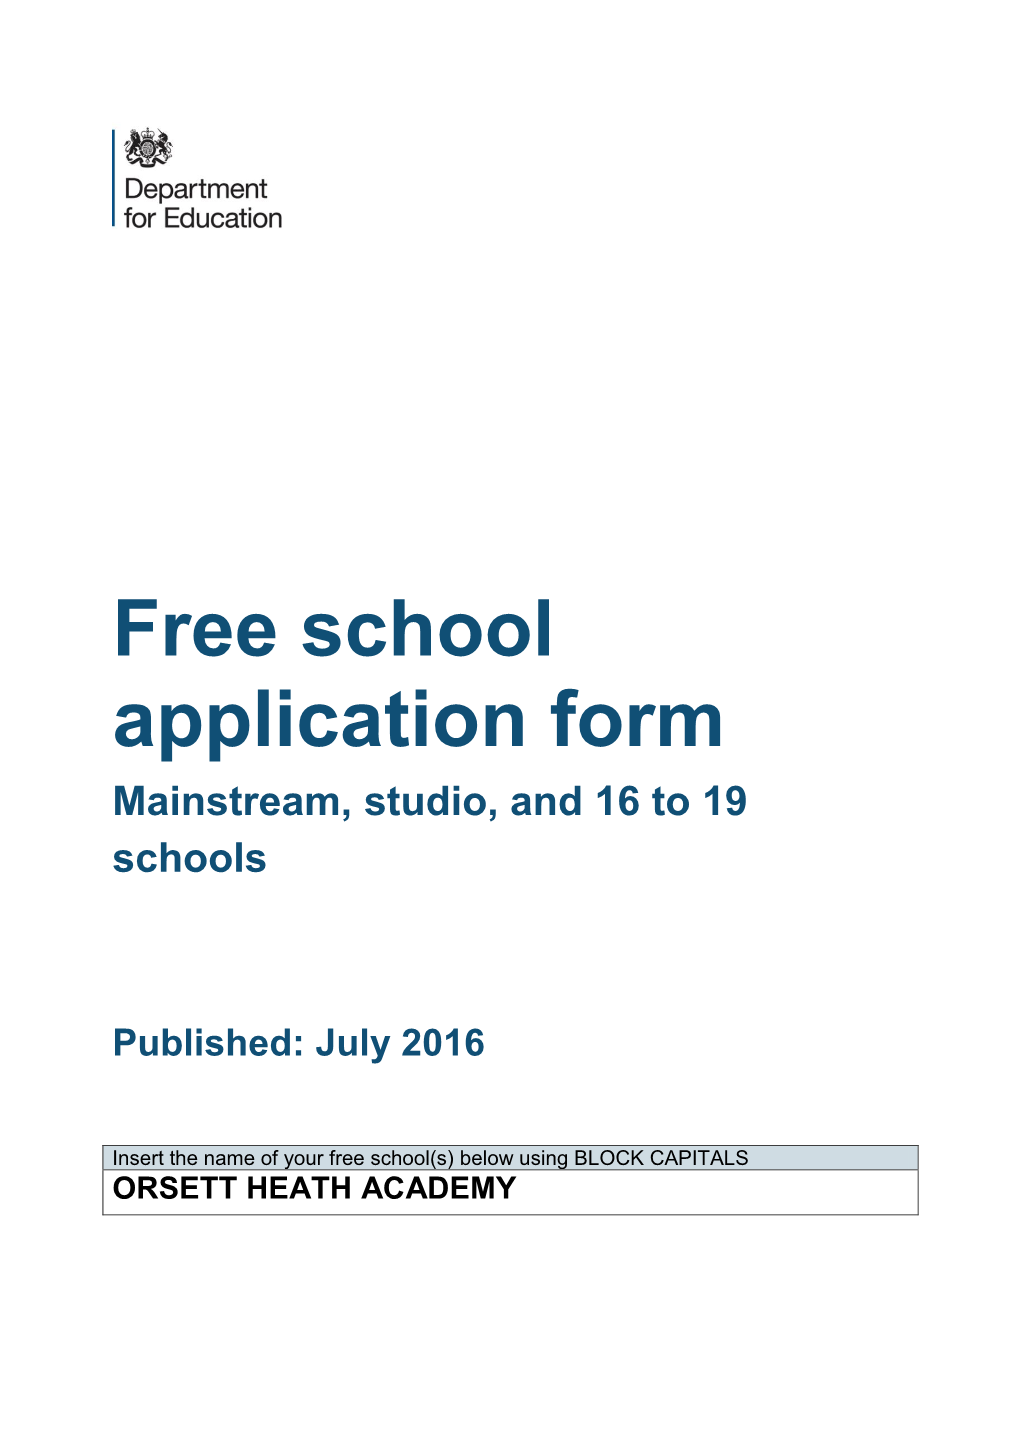 Free School Application Form Mainstream, Studio, and 16 to 19 Schools